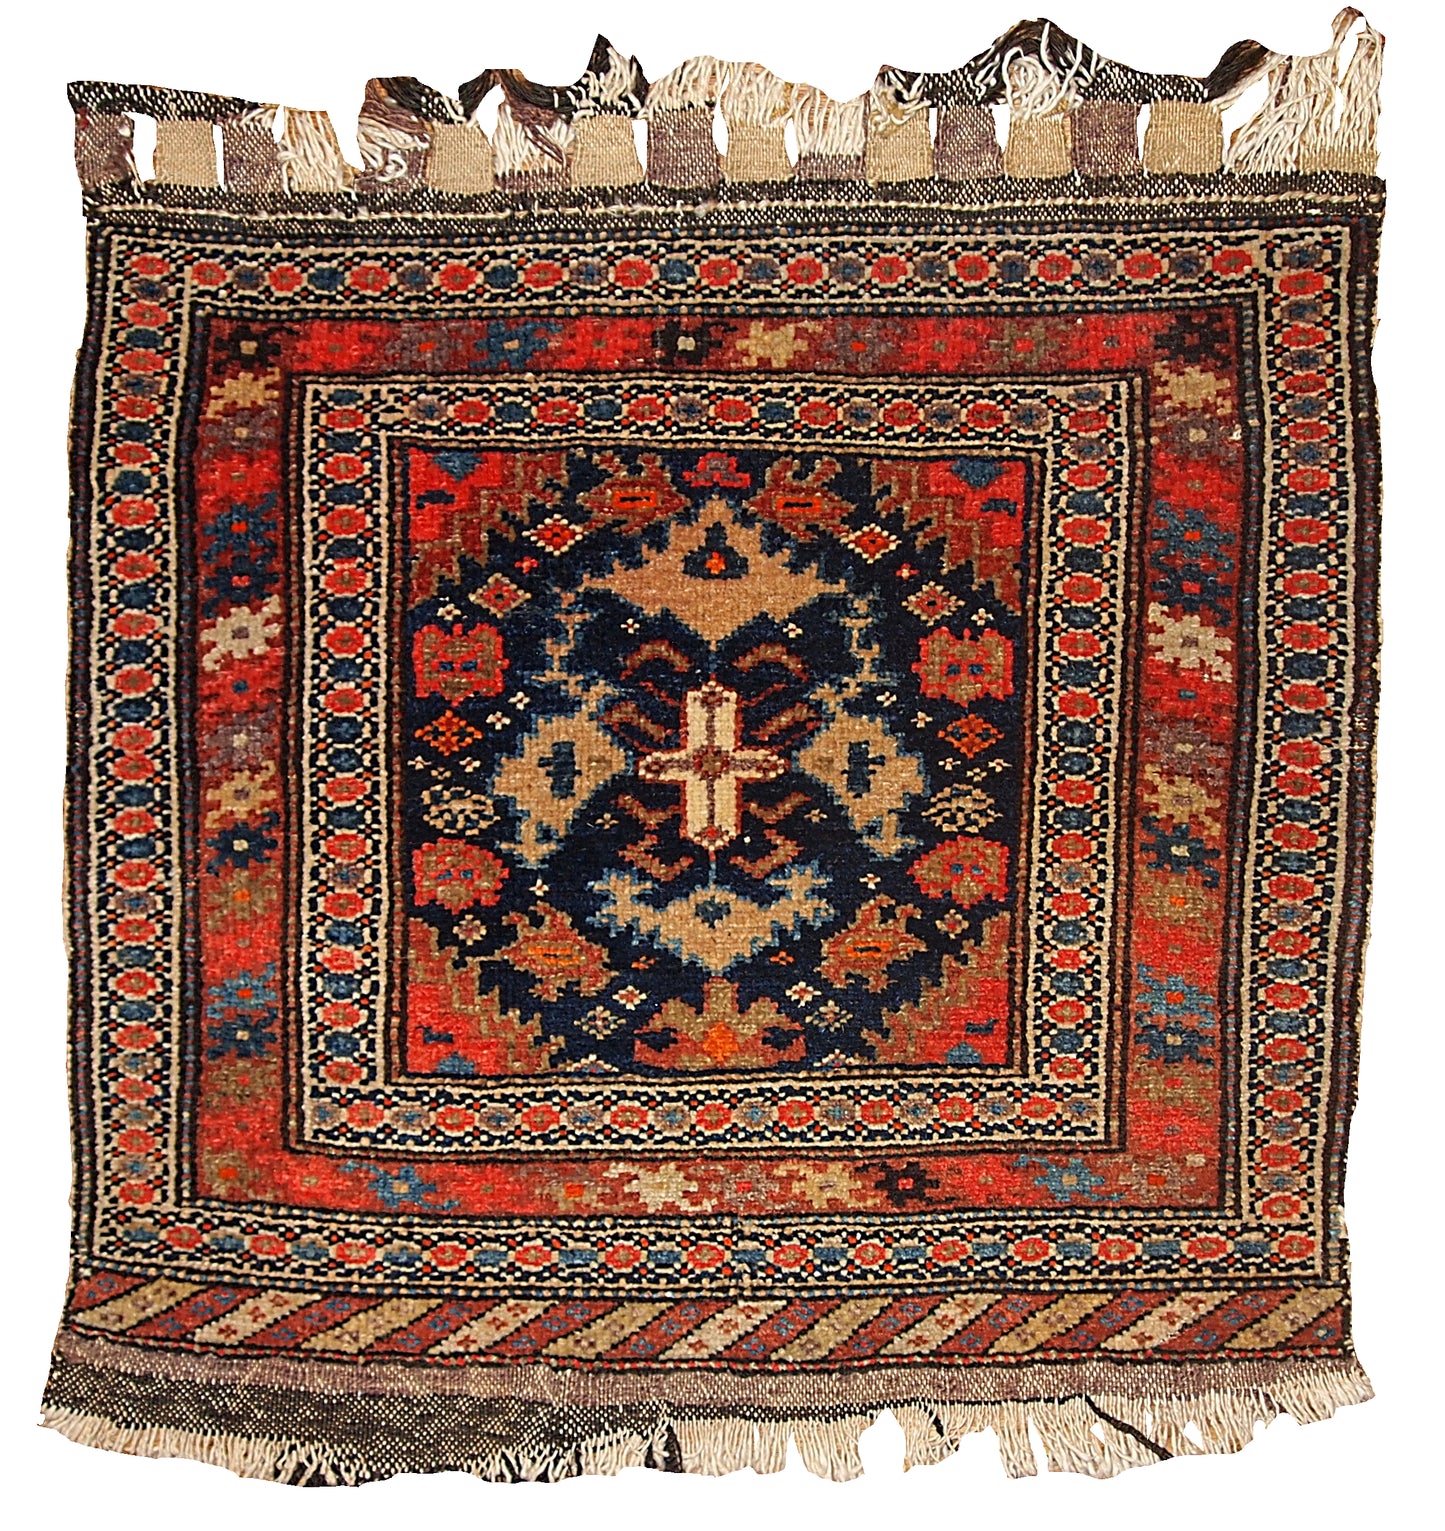 Handmade antique collectible Persian Malayer bag face 2' x 2.3' (61cm x 70cm) 1900s - 1B334